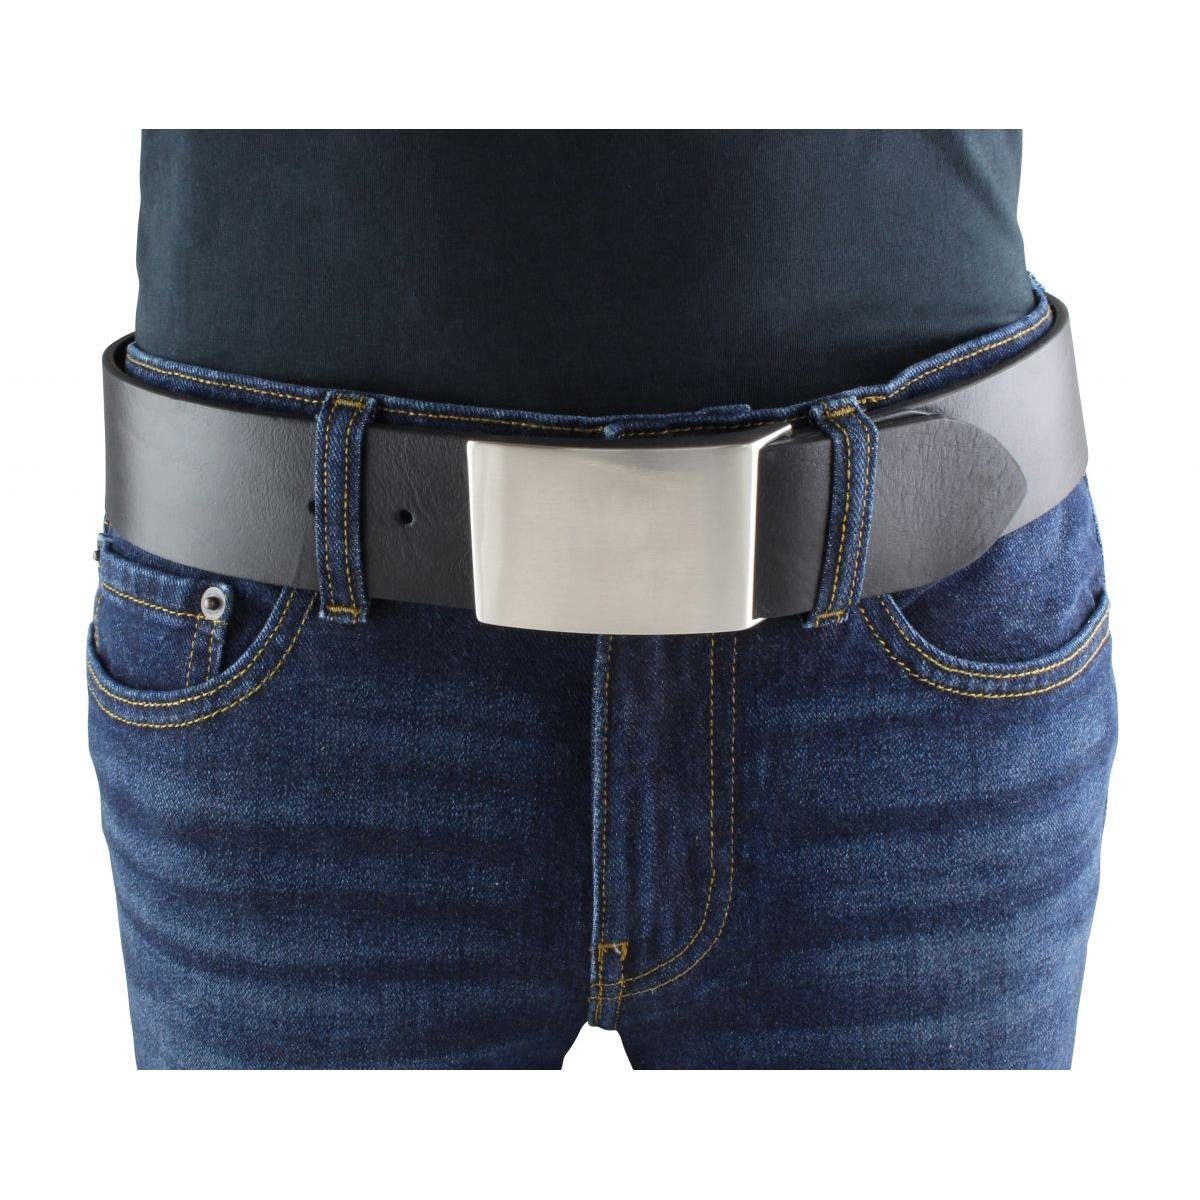 BELTINGER Vollrindleder Herren Gürtel cm 50mm Silber Jeans-Gürtel Ledergürtel - - aus 5,0 Jeans für Marine,